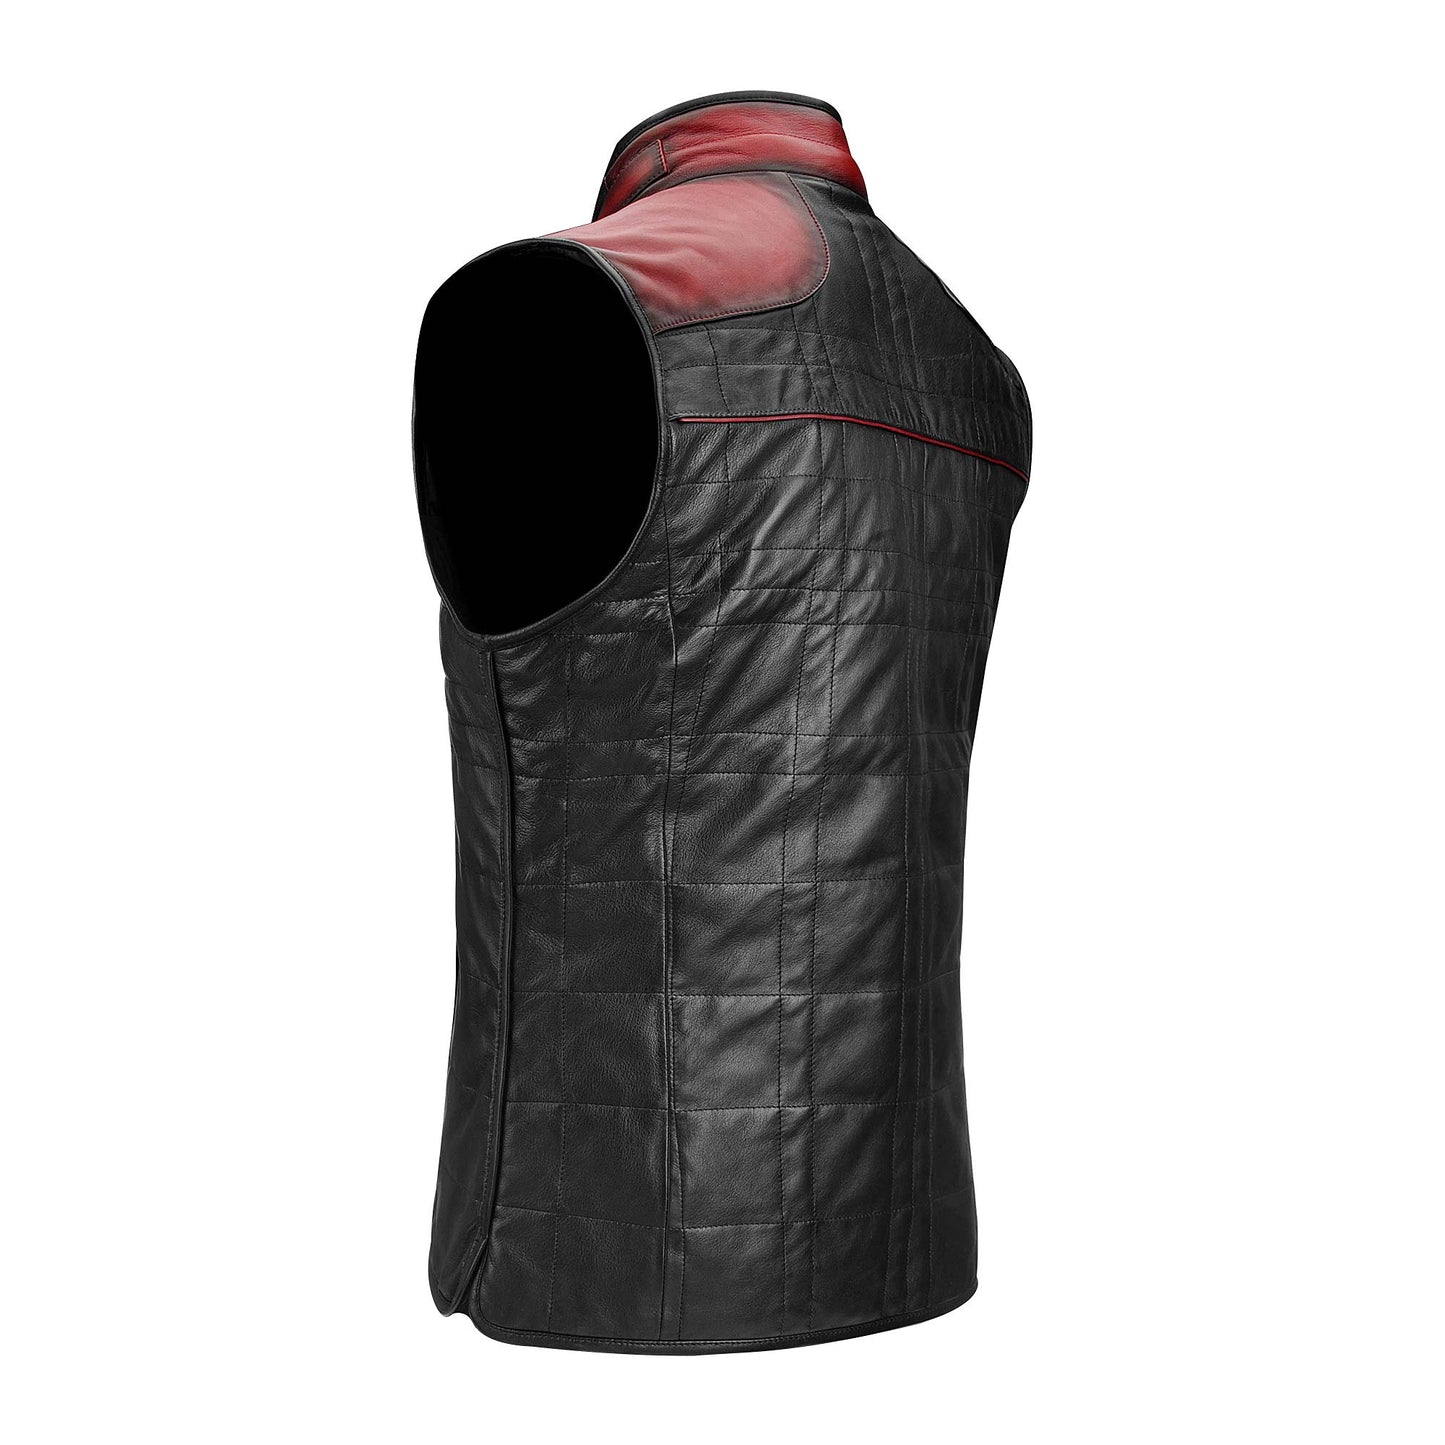 Black leather reversible vest